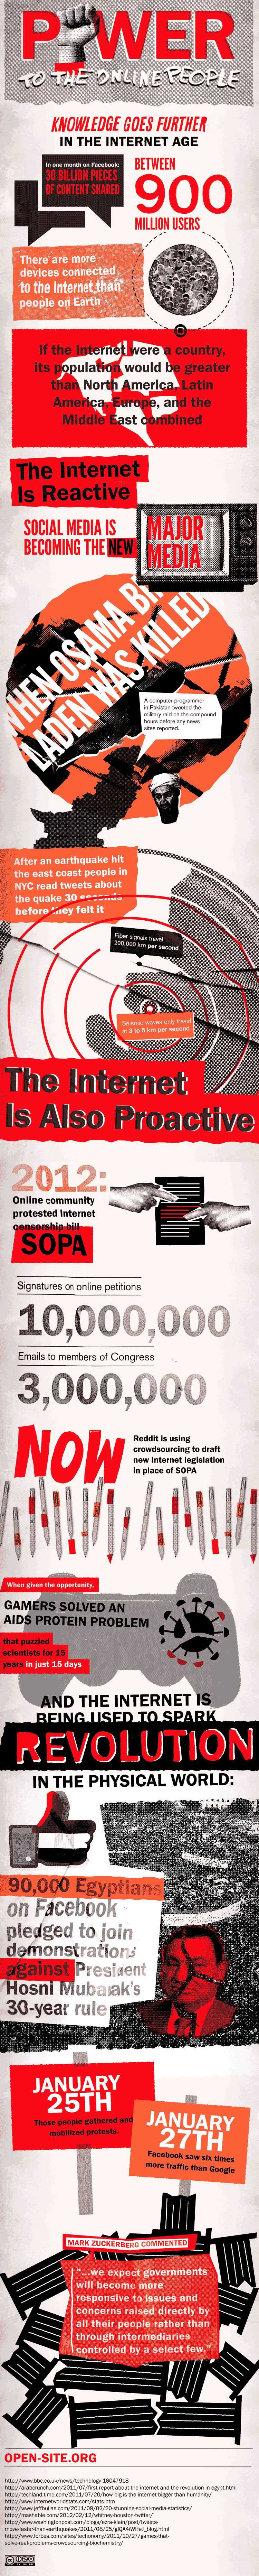 Repere de activism online în 2012